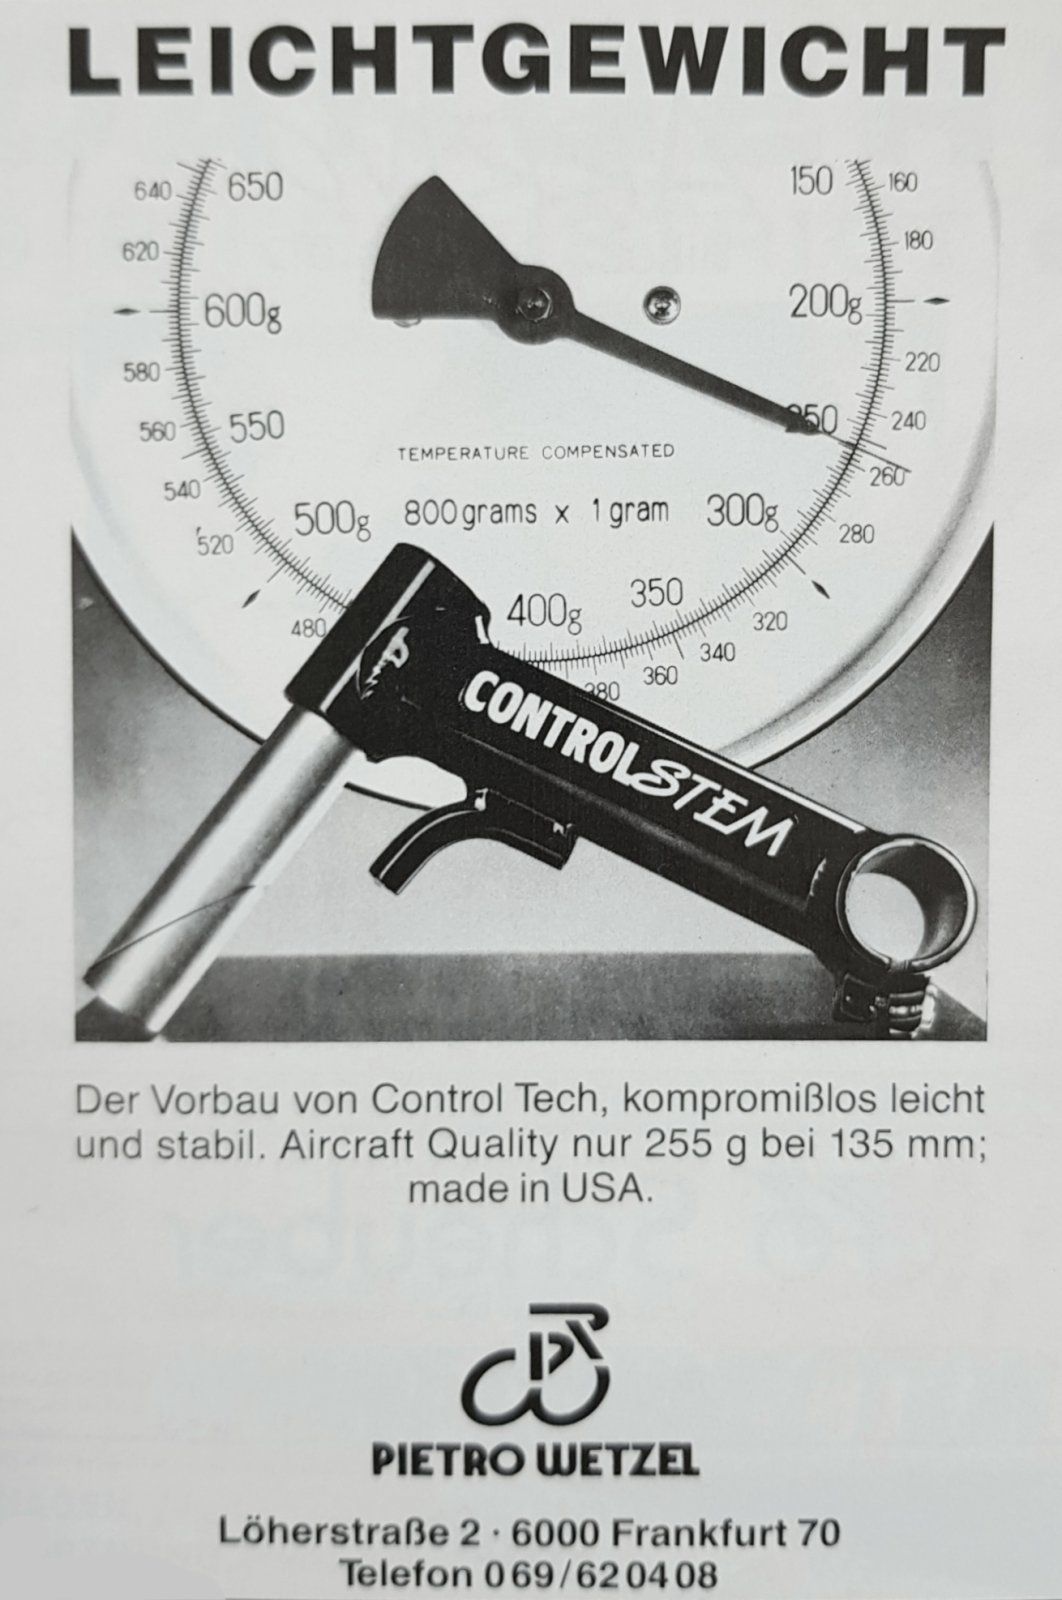 Control tech control stem Ad aus Bike 1-2 1992.jpg